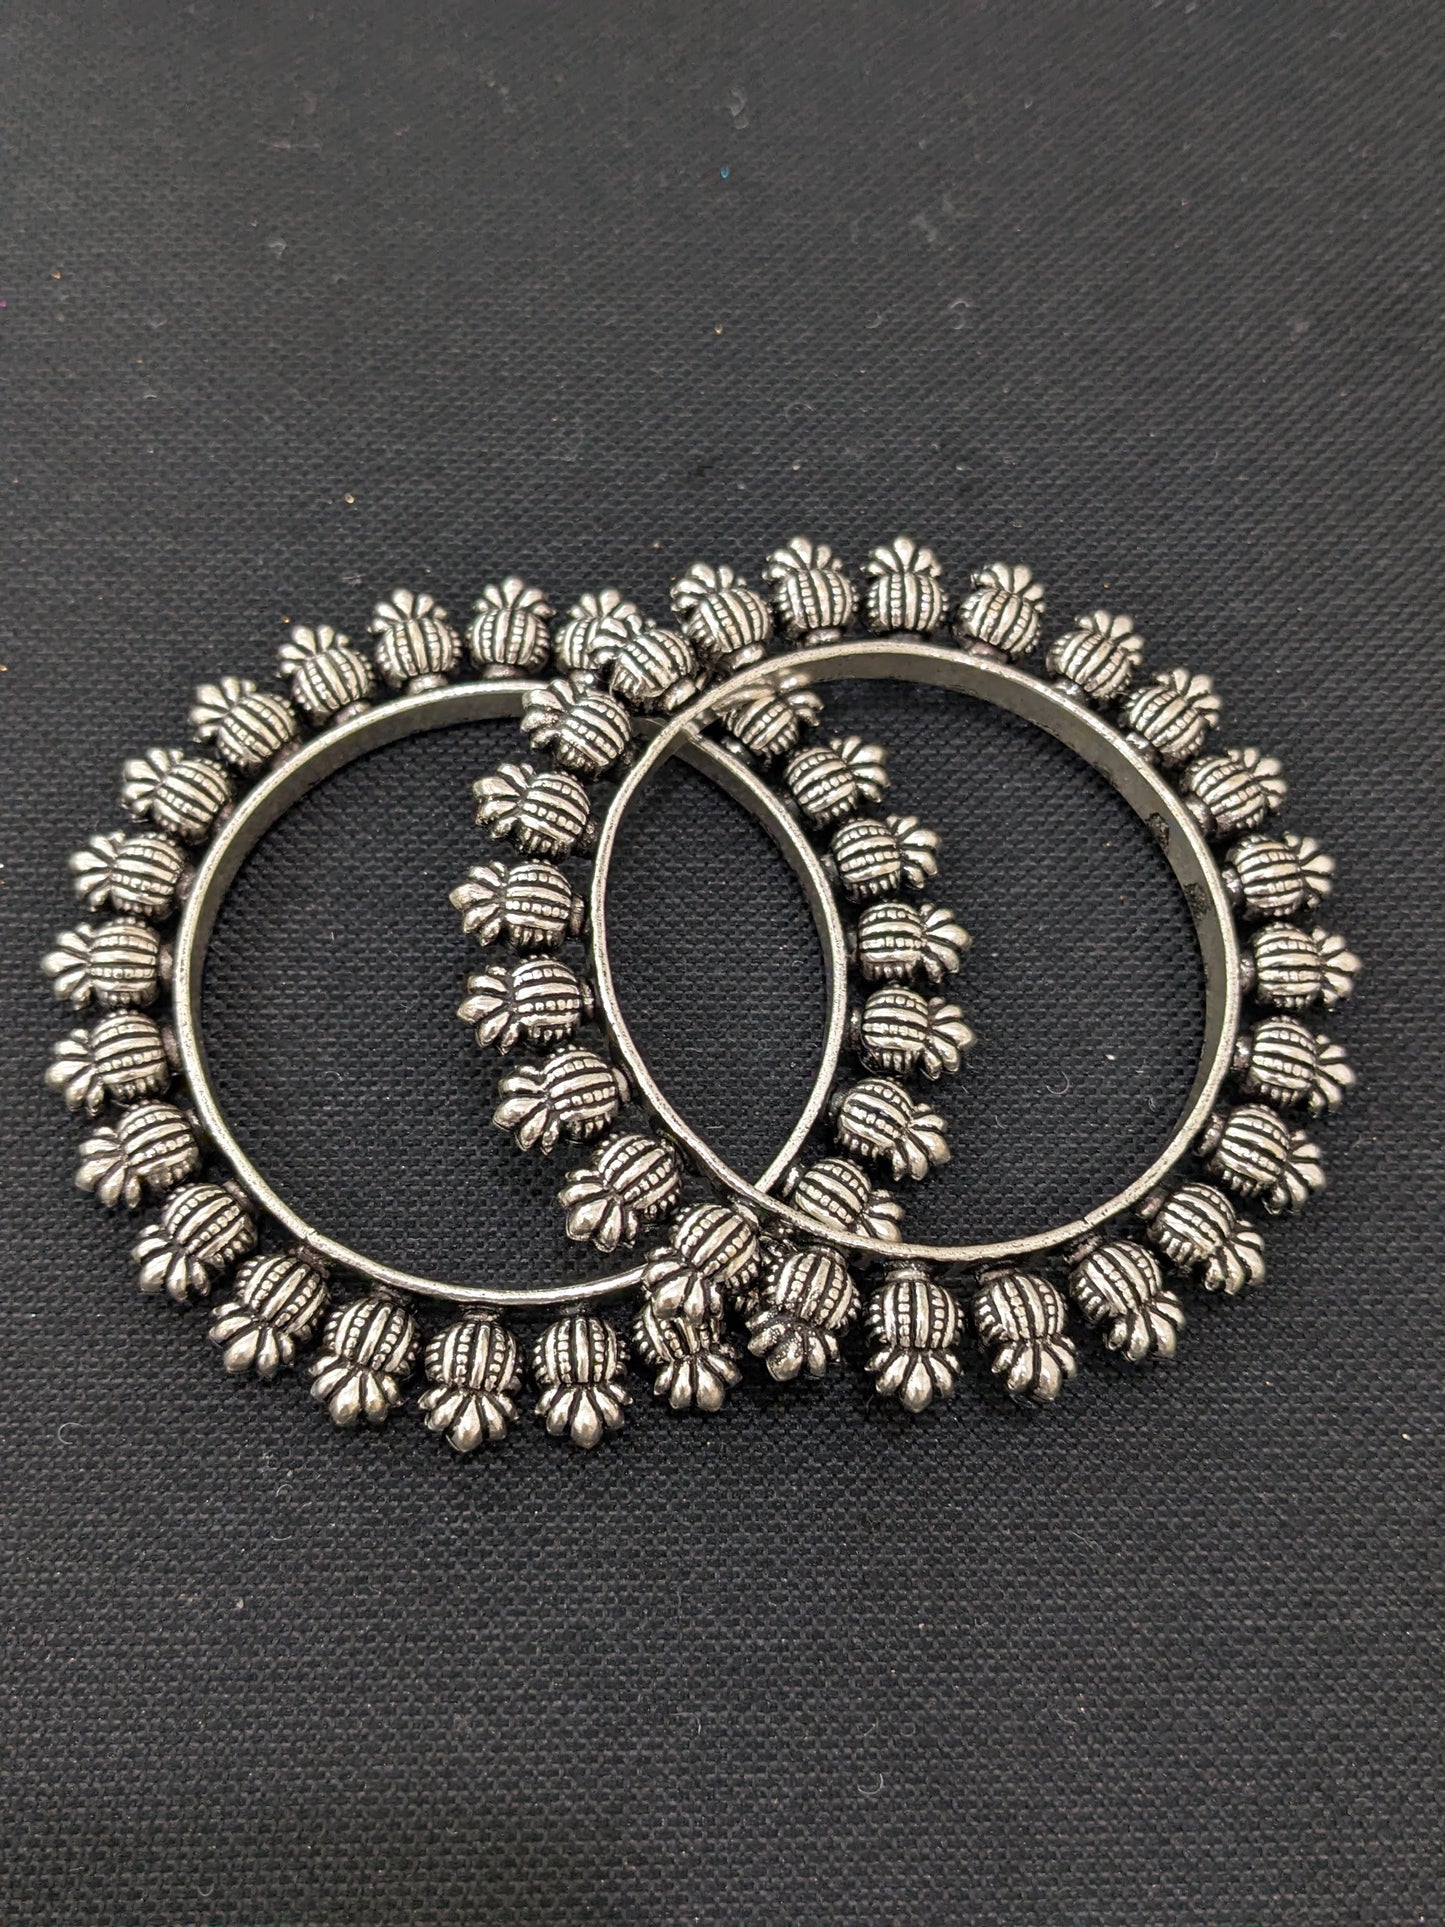 Oxidized silver pair bangles - Pineapple design